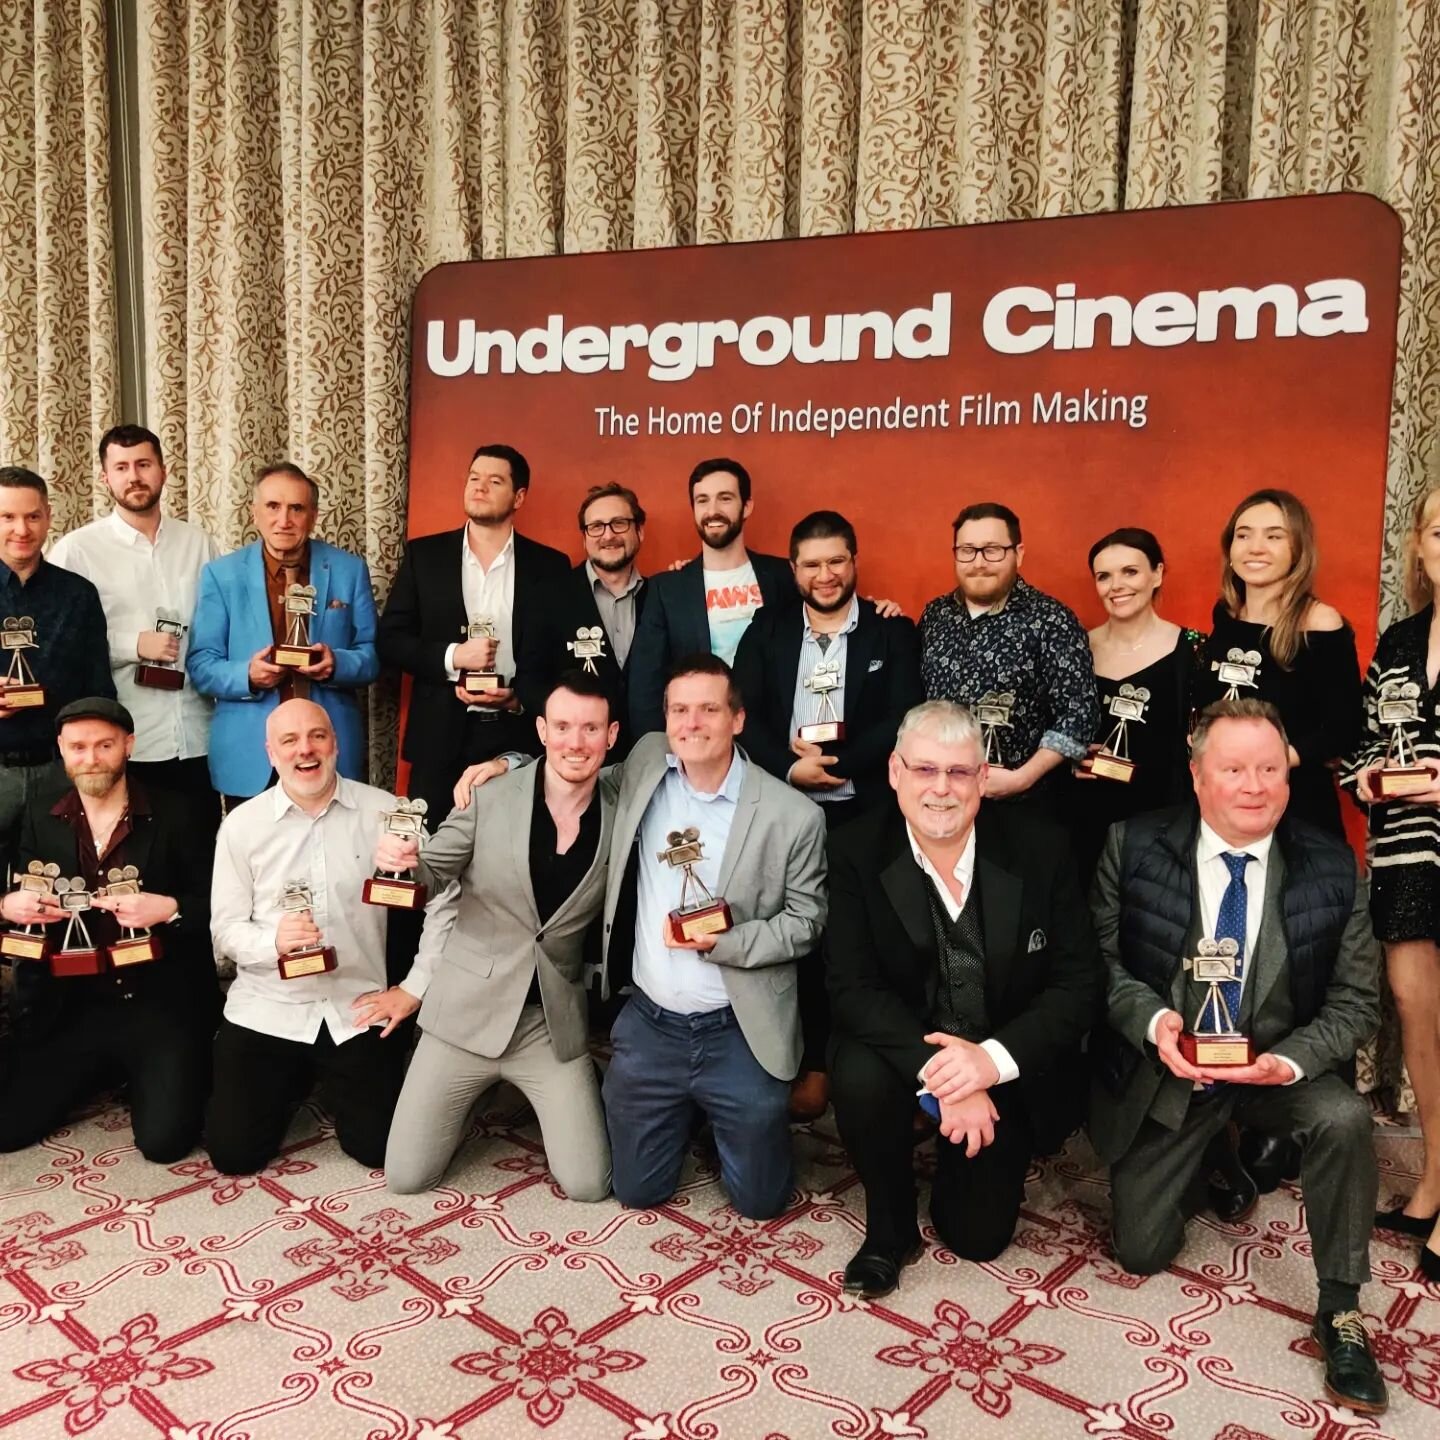 📸 Some snaps from the Underground Cinema Awards 🏆

#UndergroundCinema #FollowTheDead #wildstagproductions #zombie #horror #comedy #darkcomedy #darkhumor #irishfilm #irishart #indiefilm #zombies #festival #awards #WINNER #risingstar